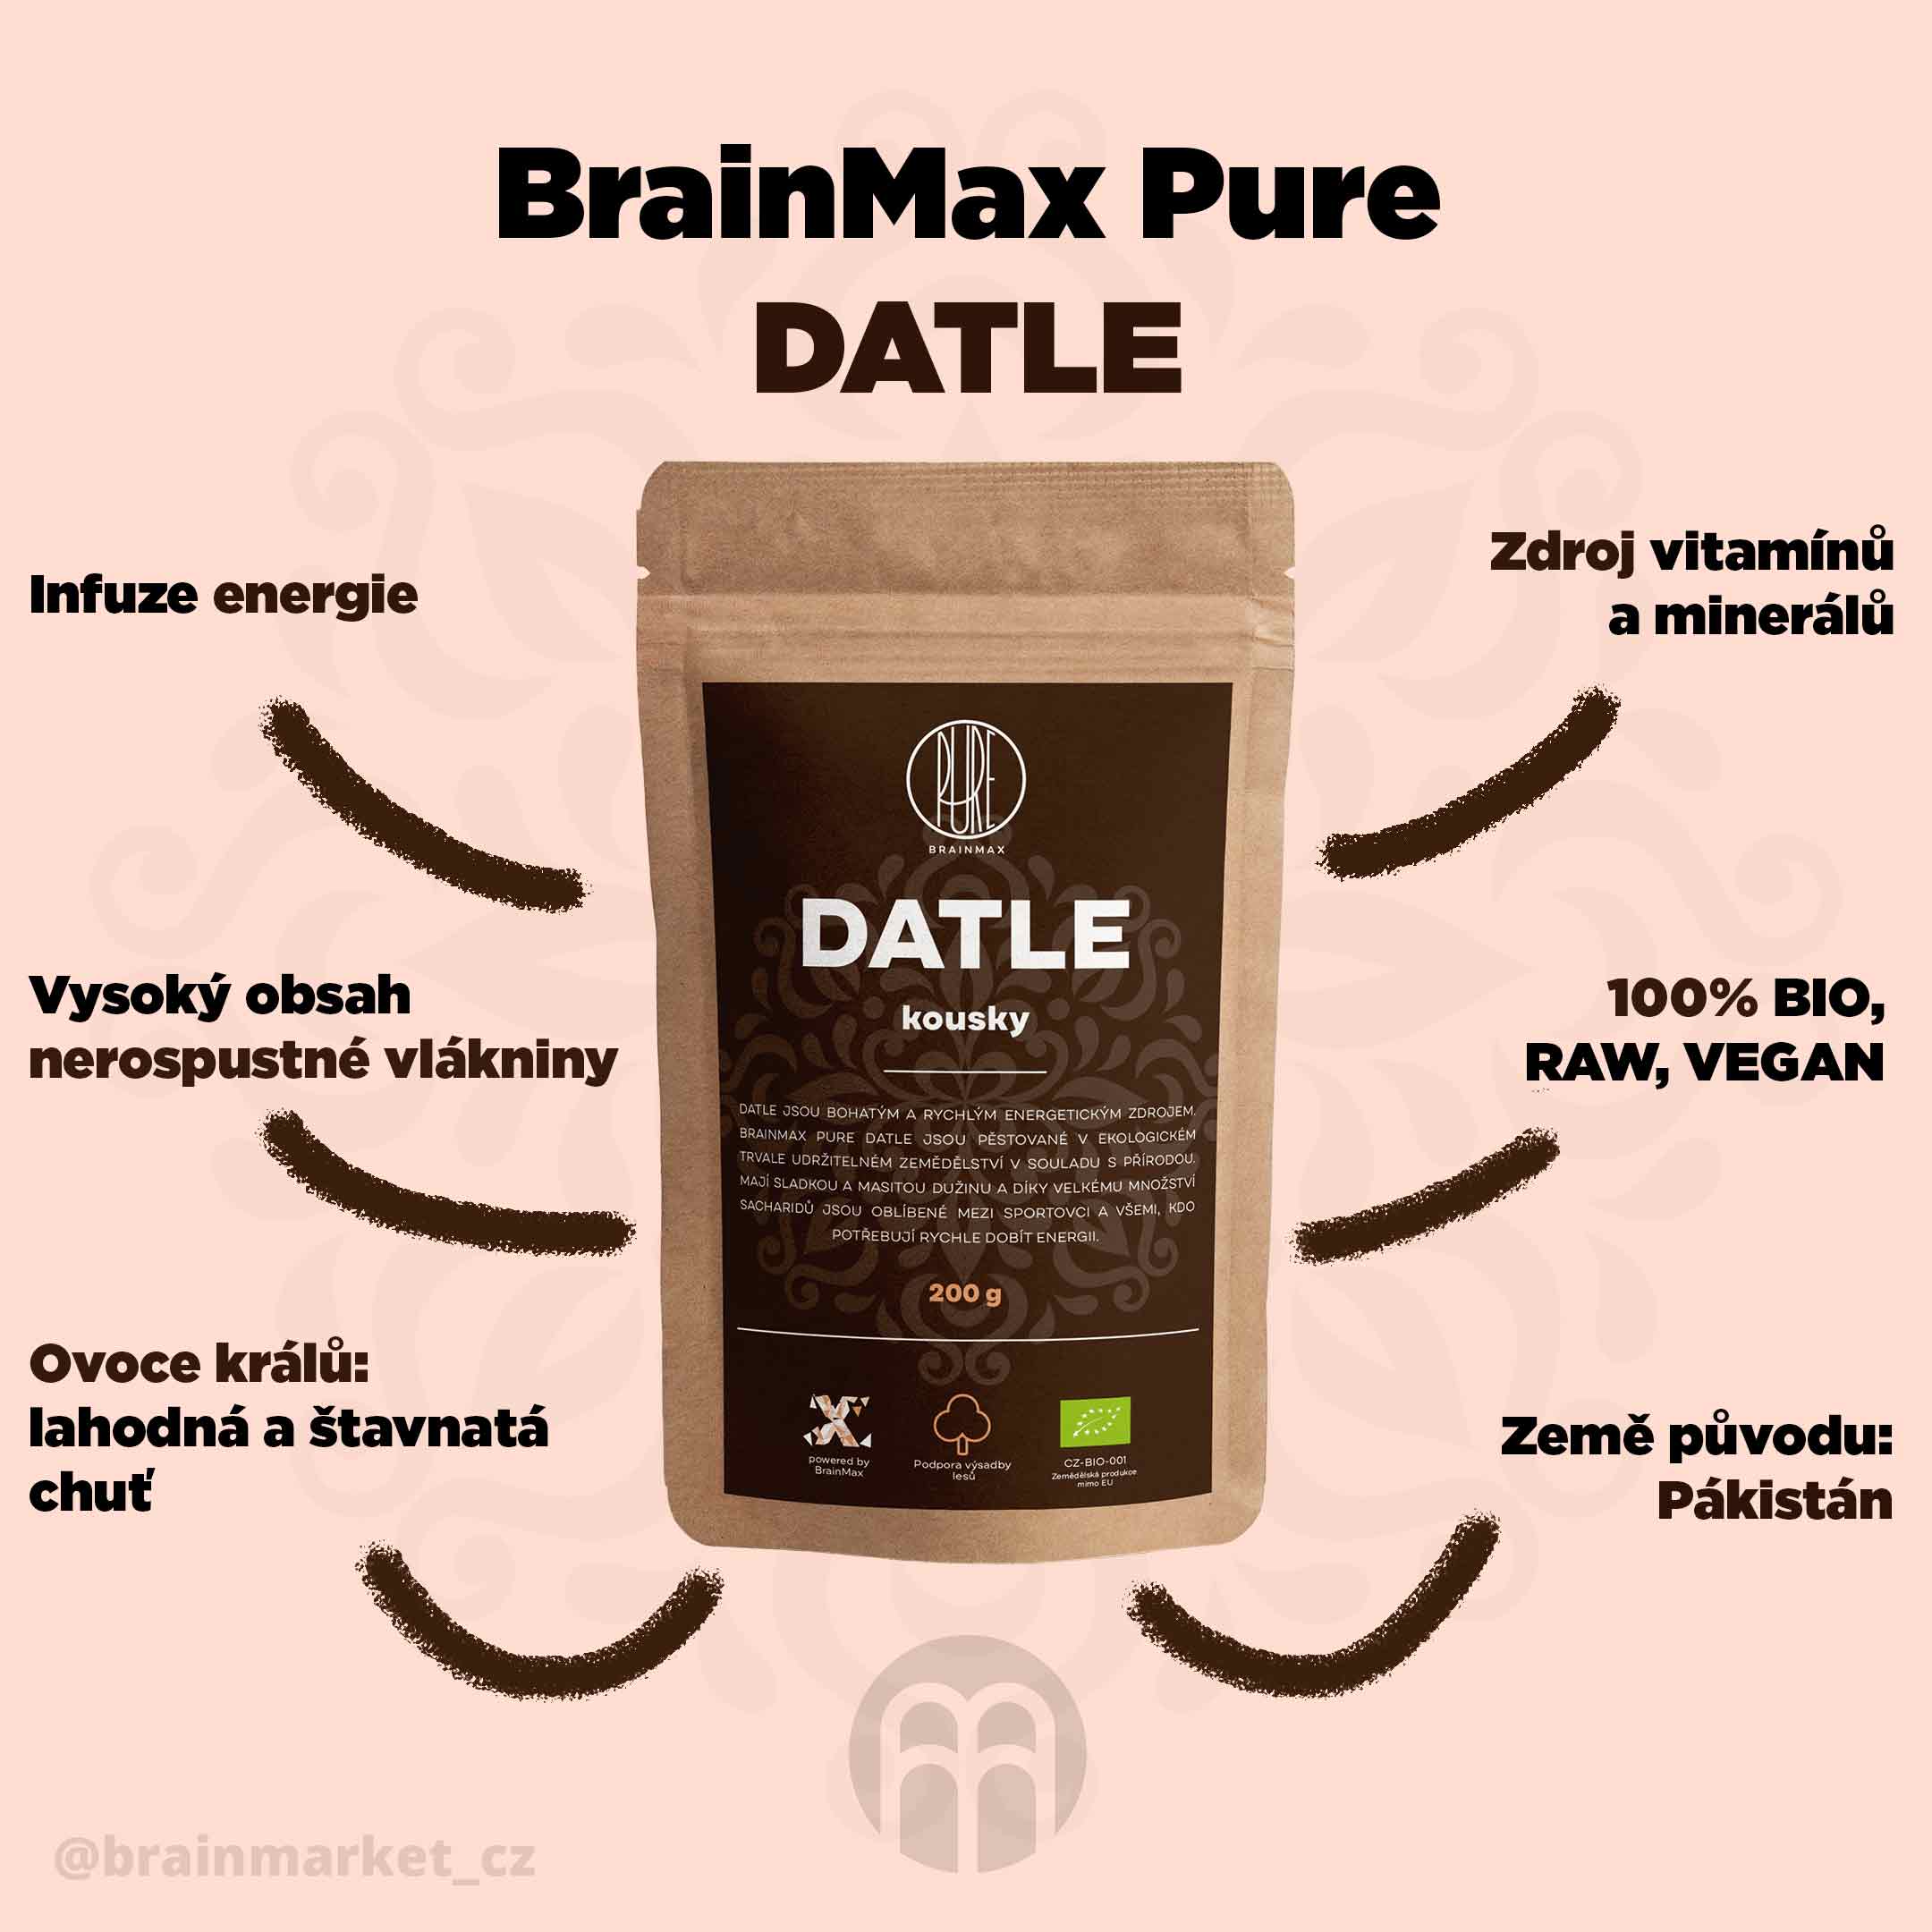 BrainMax Pure Datle - BrainMarket.cz